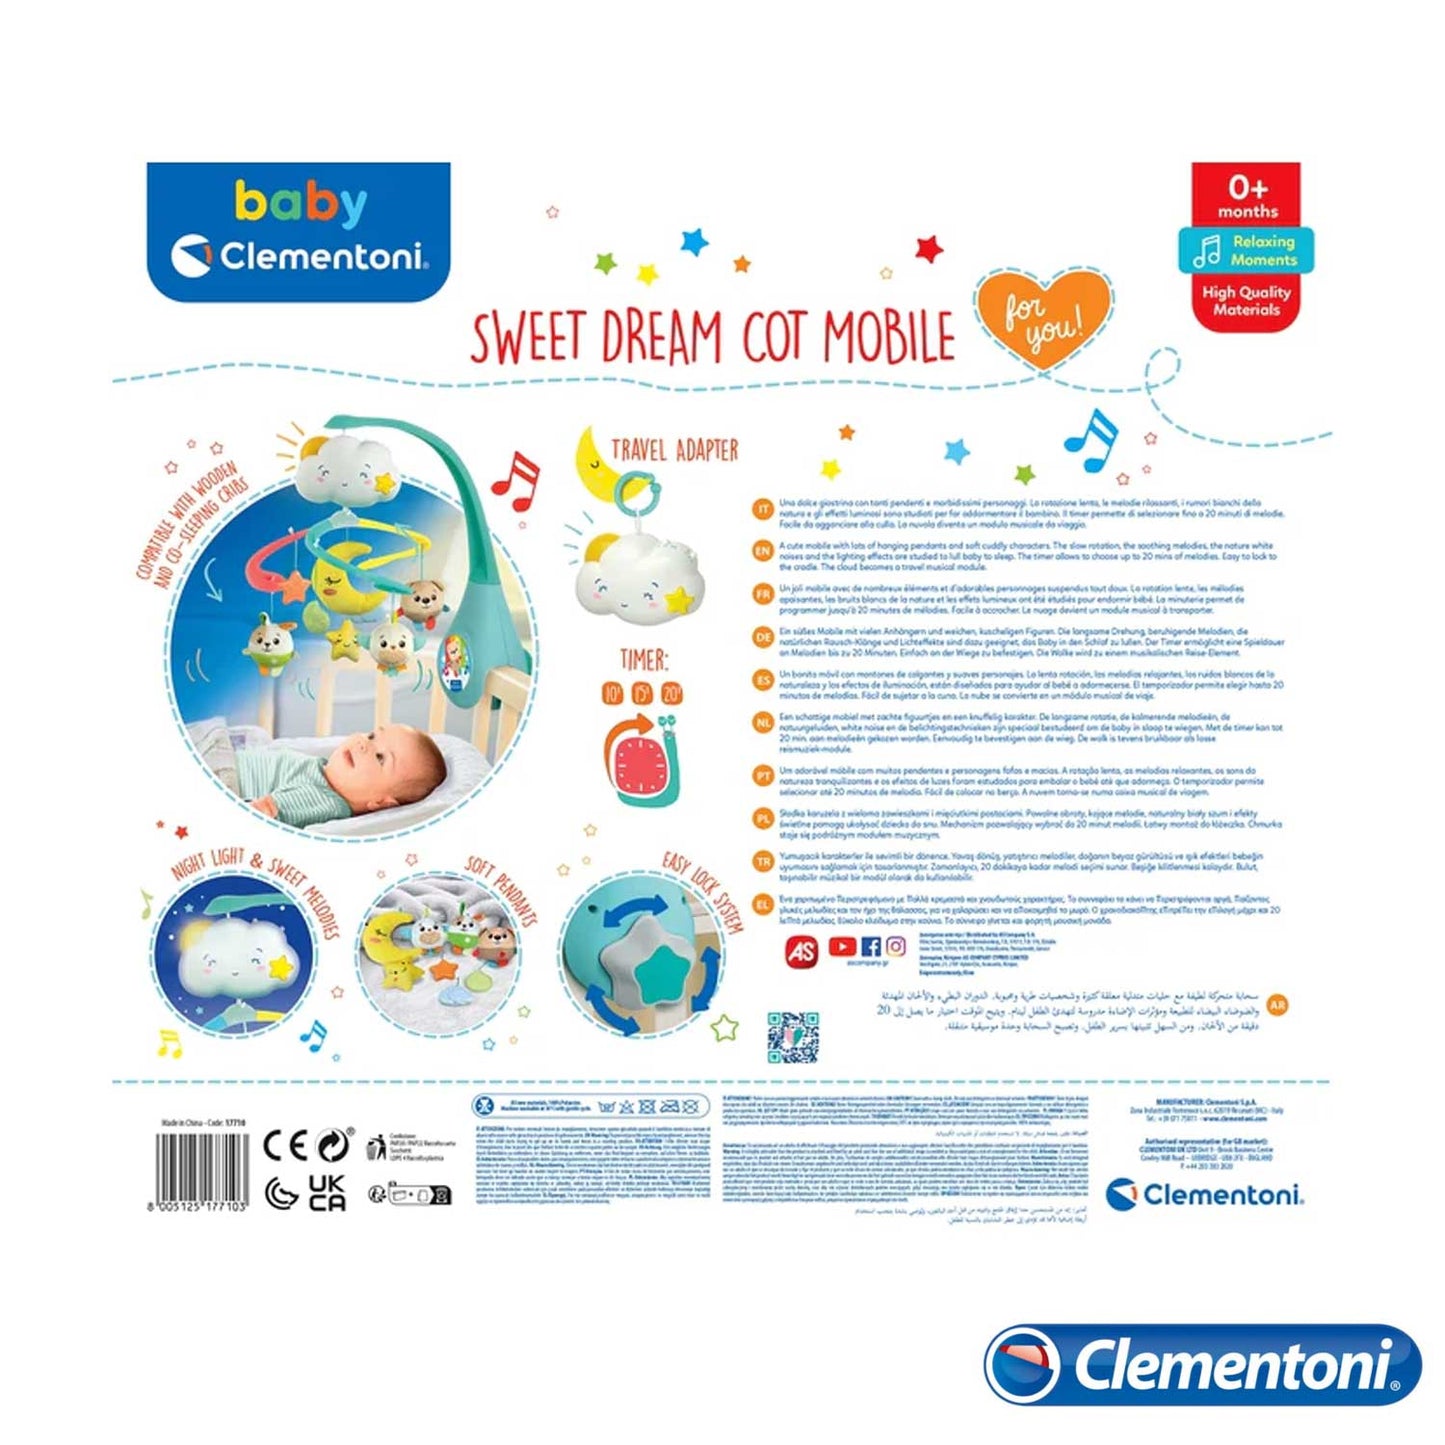 Clementoni - Sweet Cloud Mobile Cot Mobile 17710